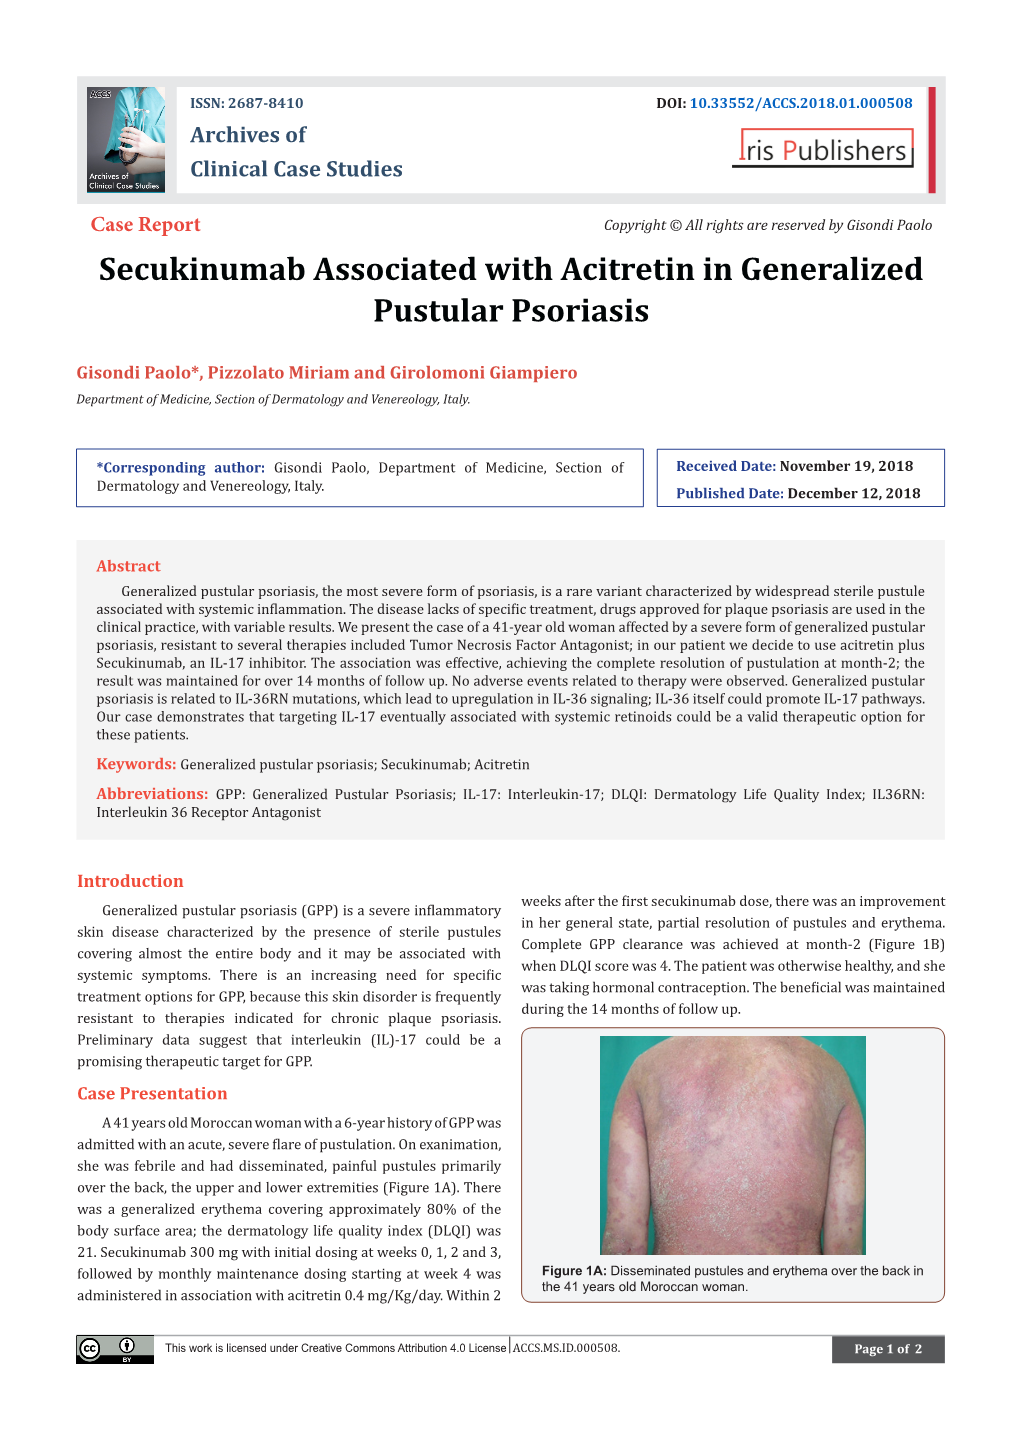 Secukinumab Associated with Acitretin in Generalized Pustular Psoriasis